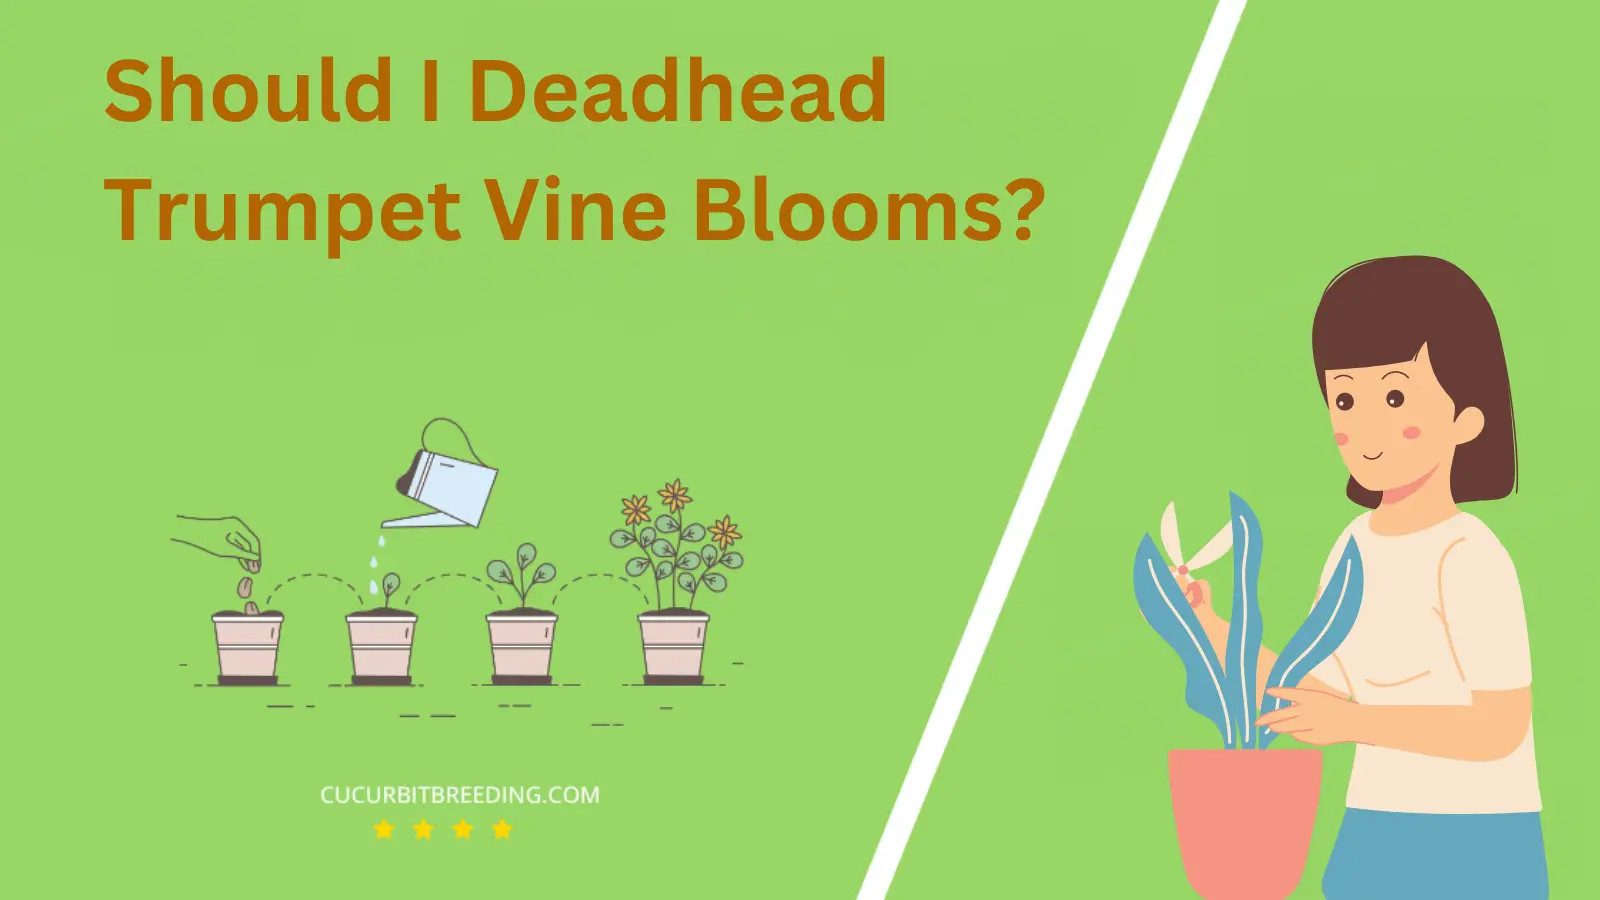 Should I Deadhead Trumpet Vine Blooms?